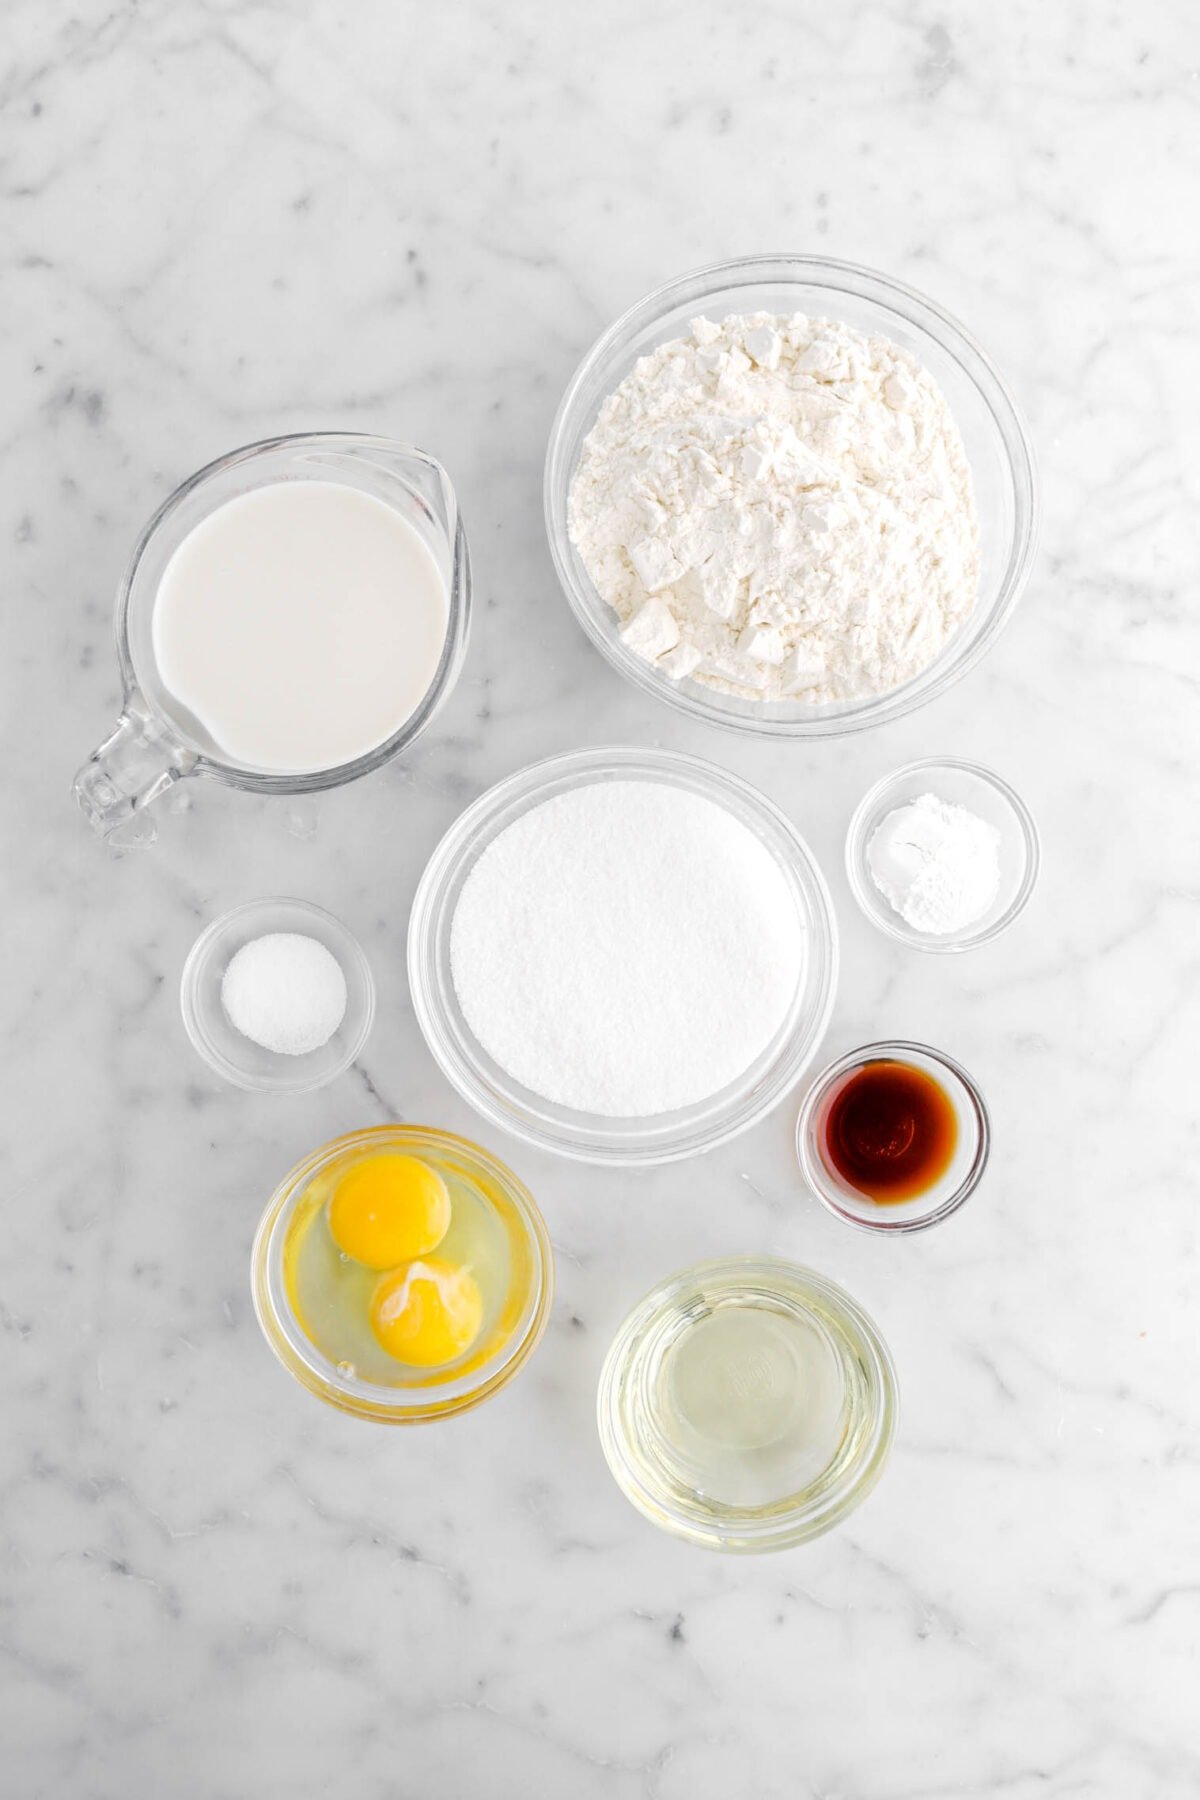 flour, milk, sugar, baking powder, salt, vanilla, oil, and eggs on marble surface.